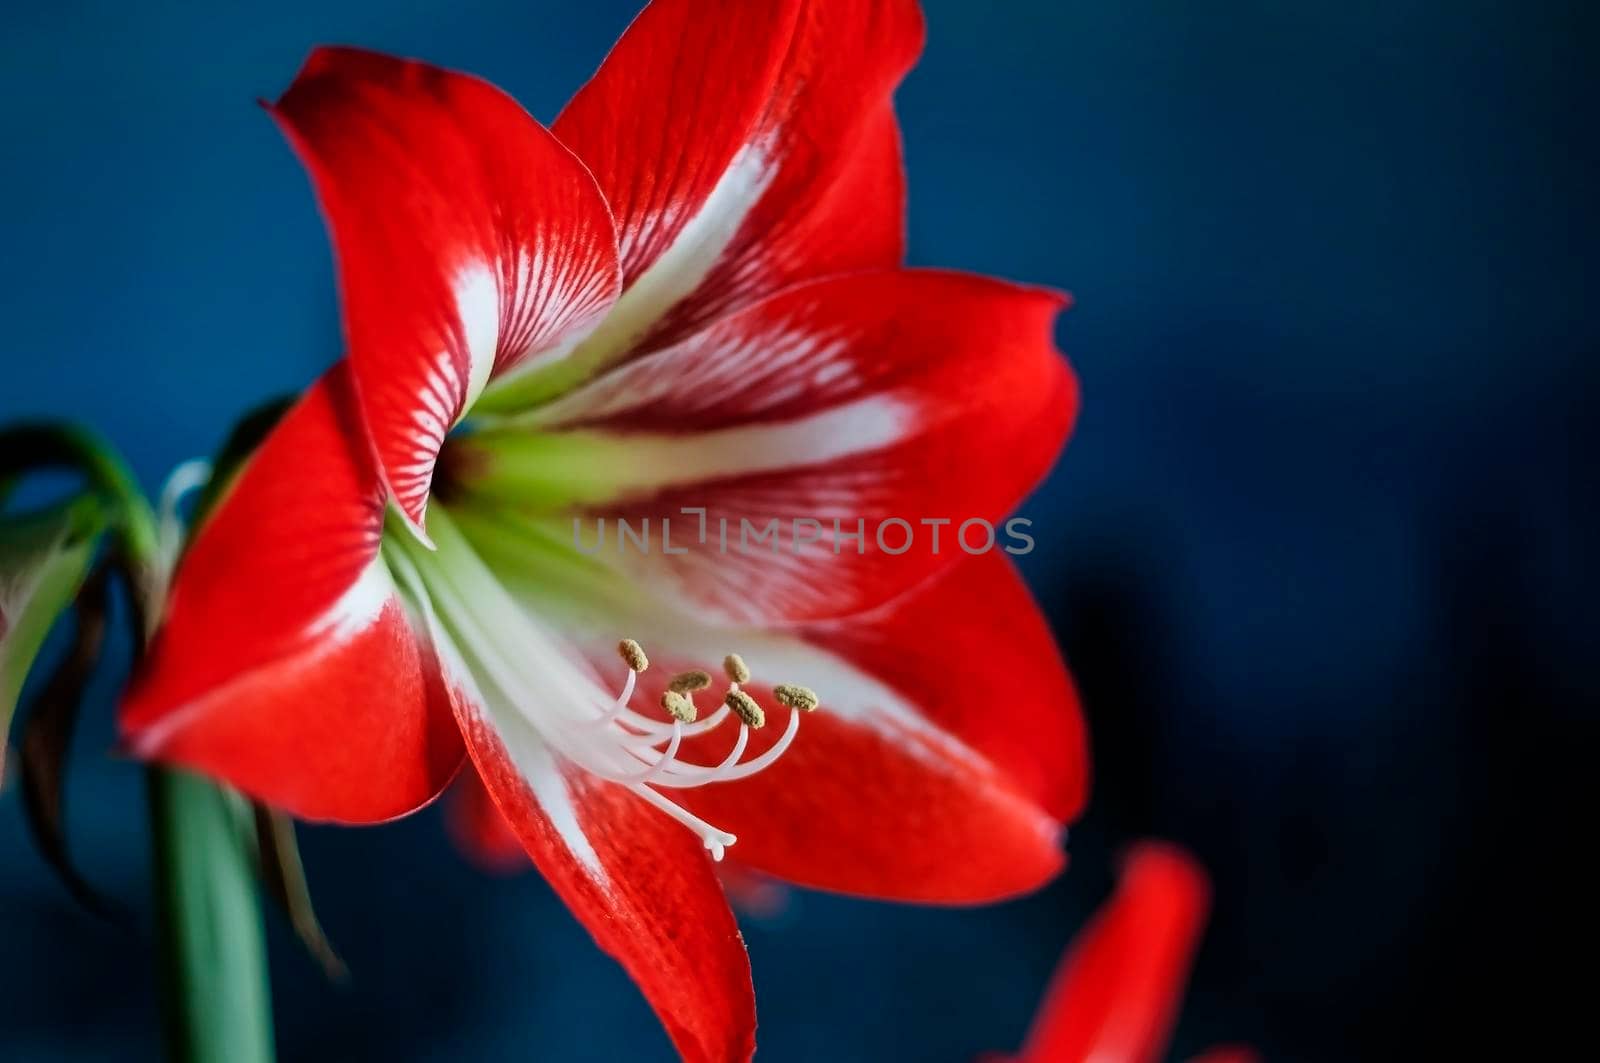 Amaryllis red flower, narrow focus area by valerypetr